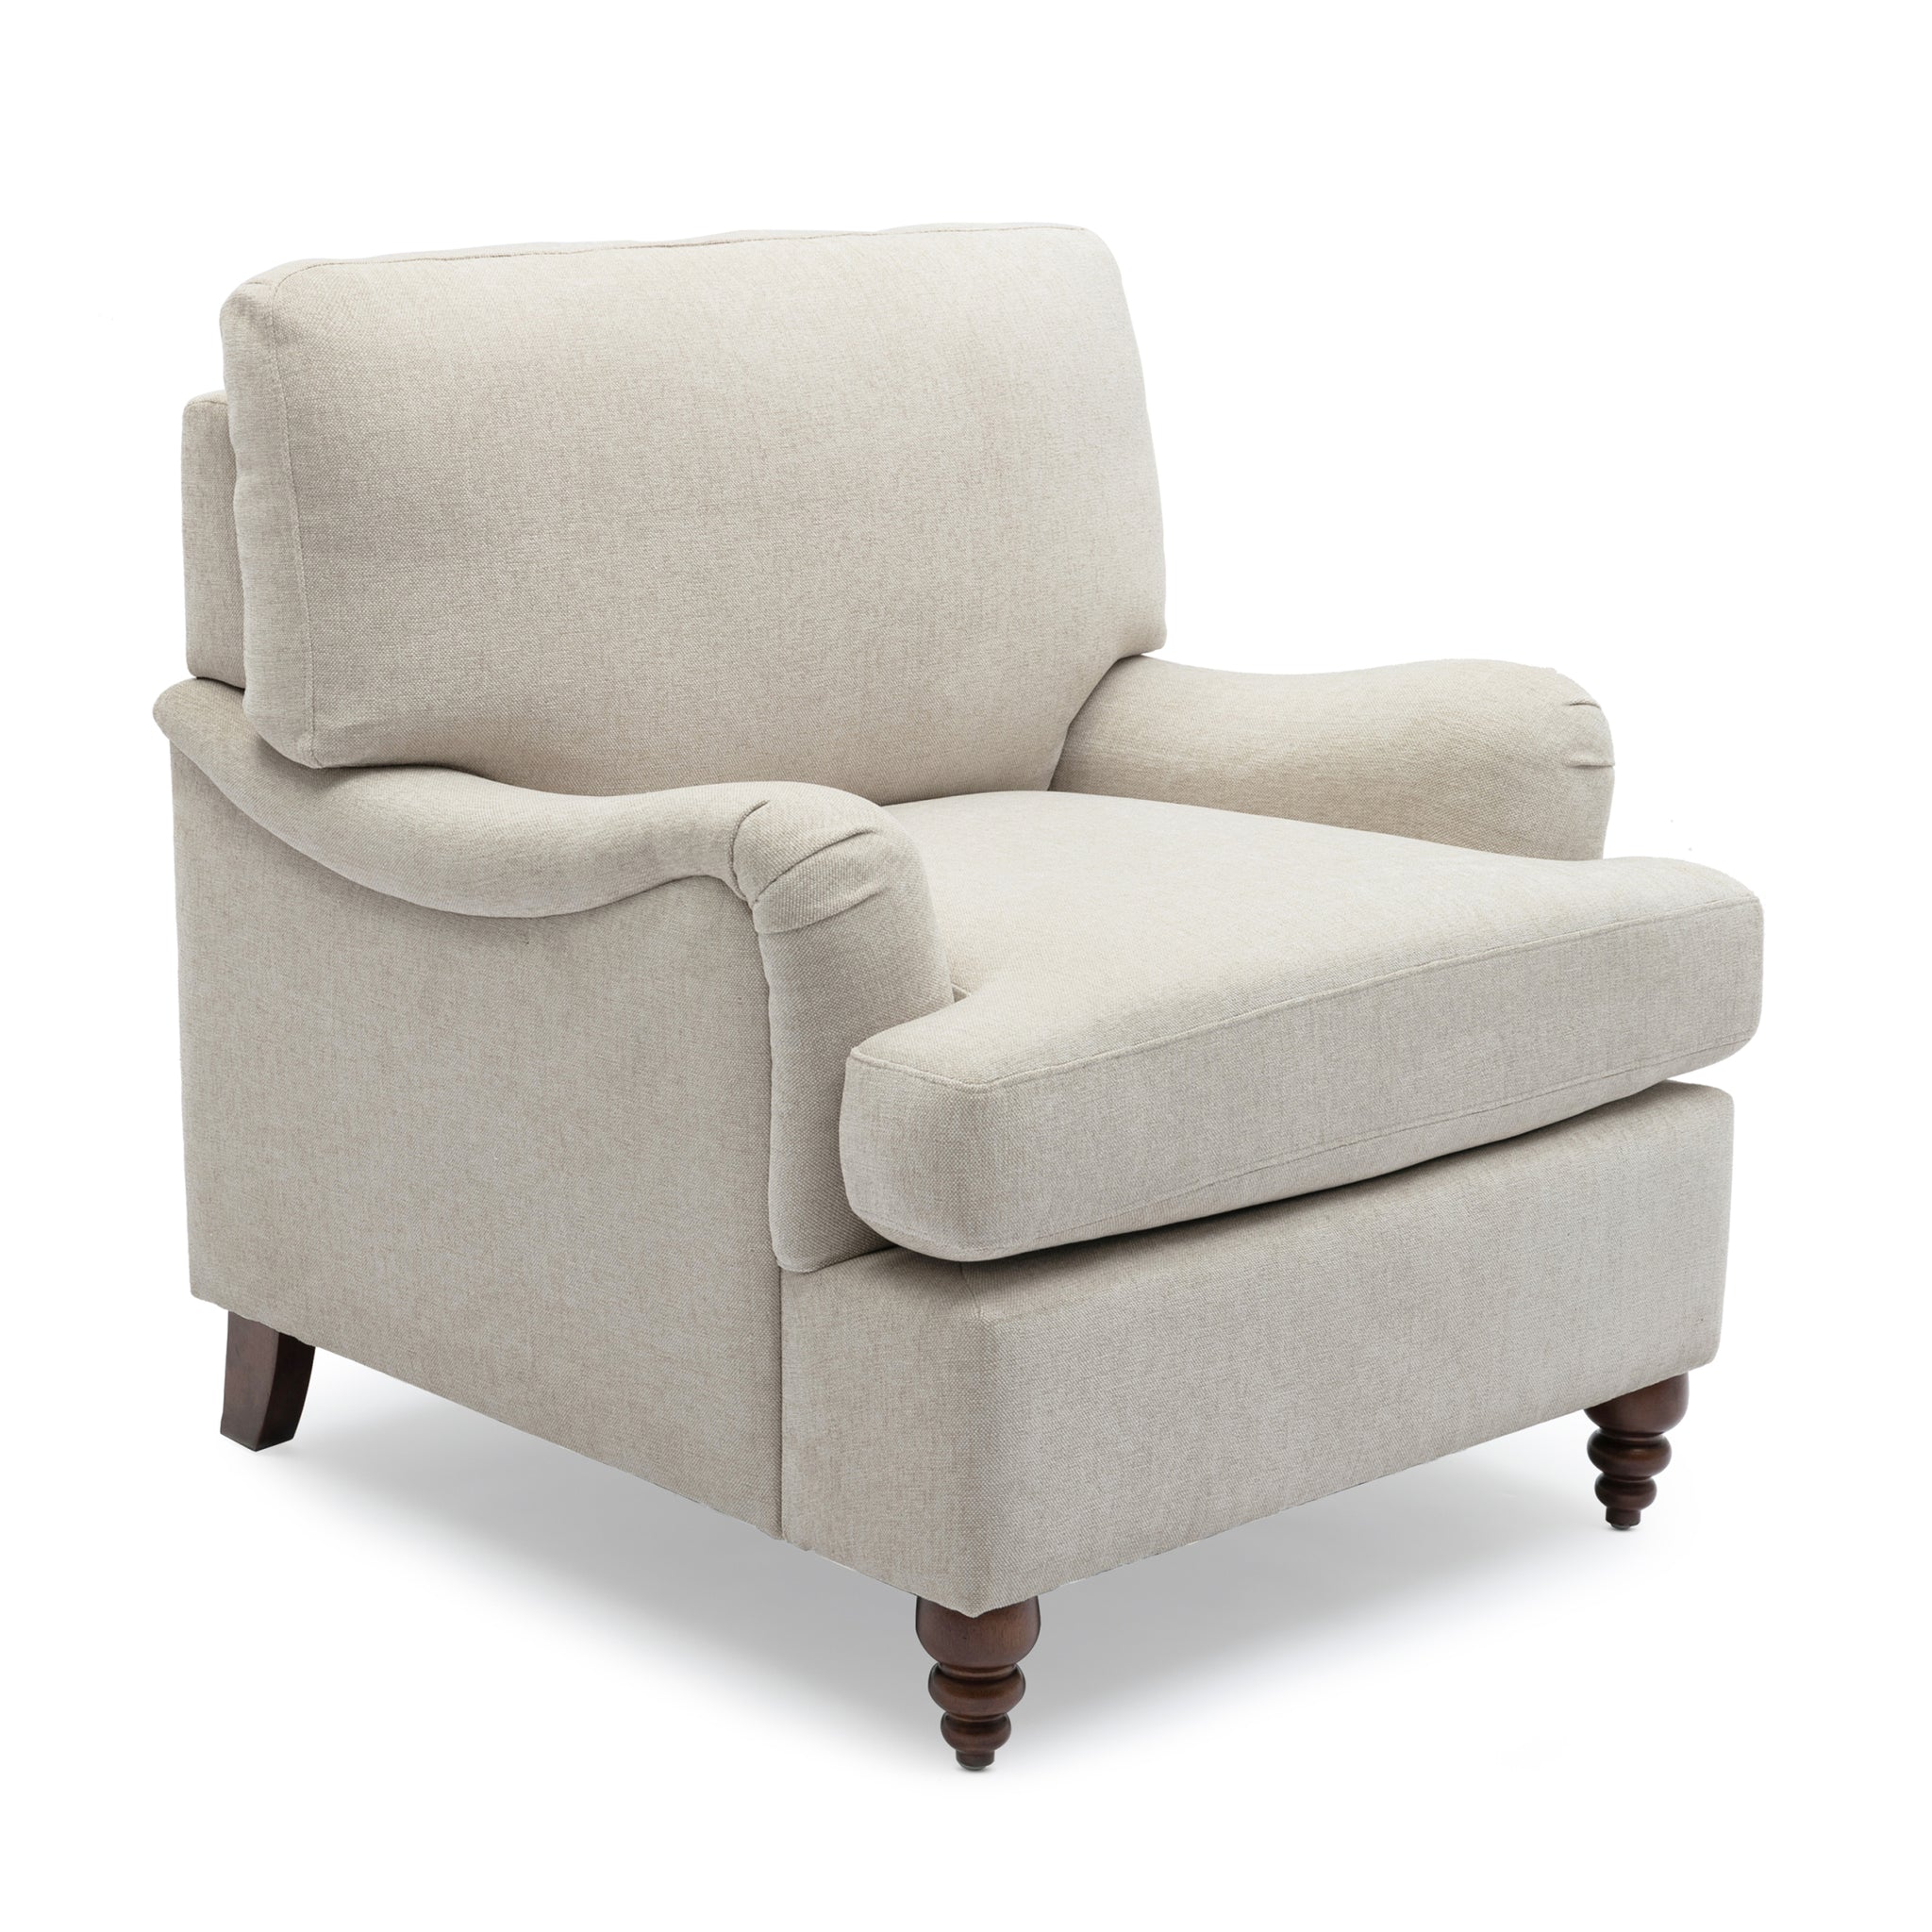 Candor Arm Chair Sea Oat light beige-foam-polyester